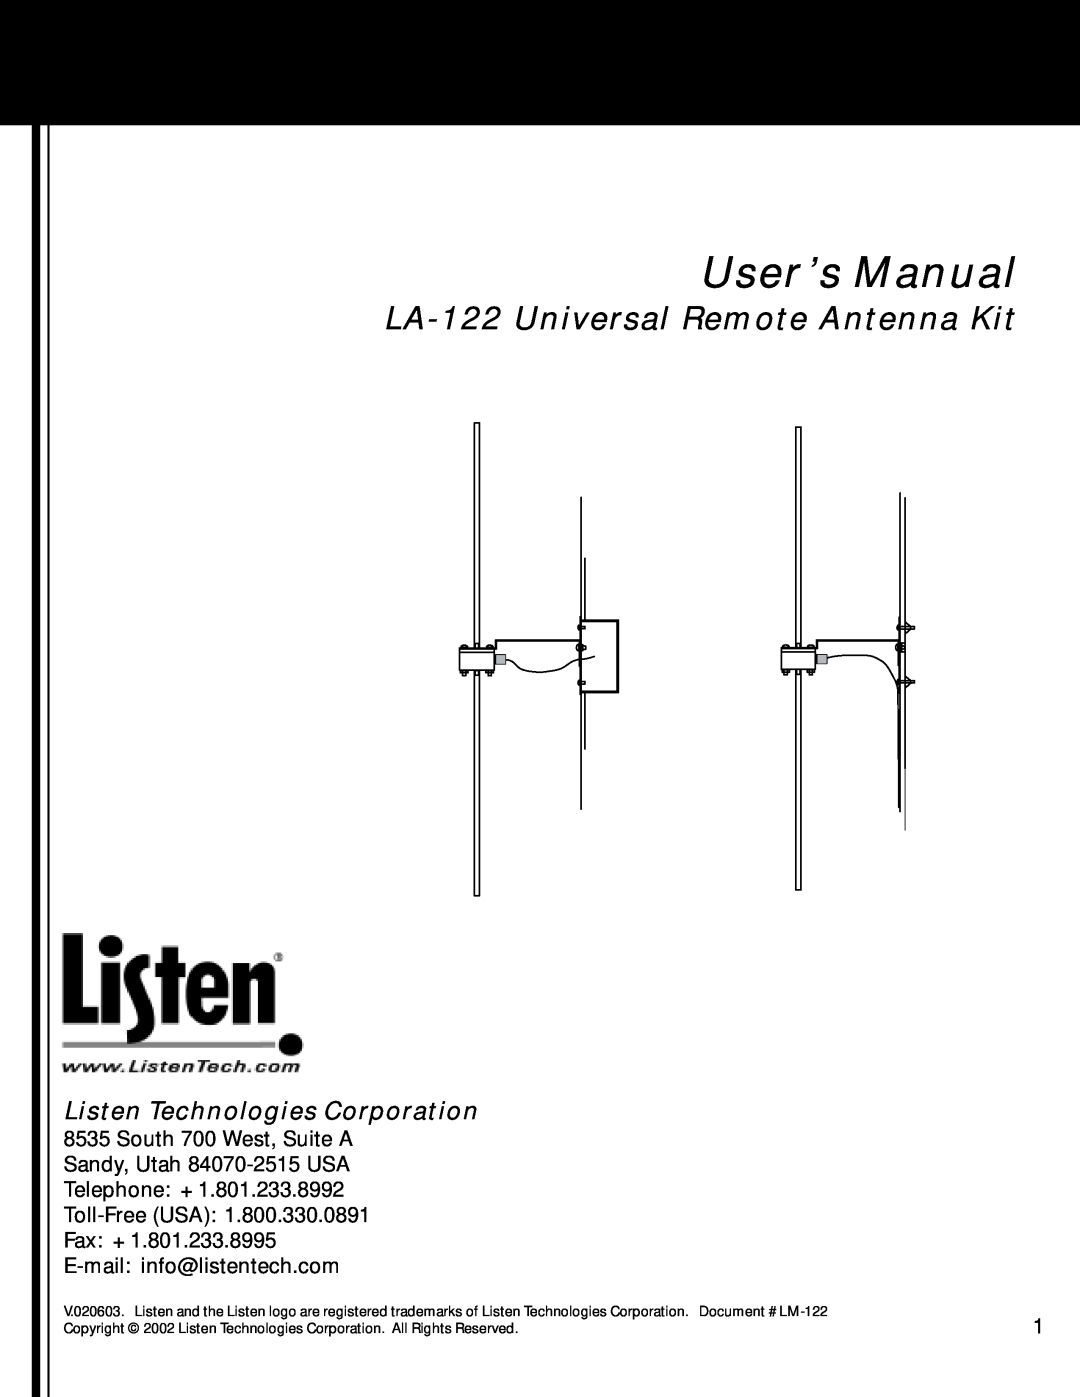 Listen Technologies user manual LA-122Universal Remote Antenna Kit, Listen Technologies Corporation 